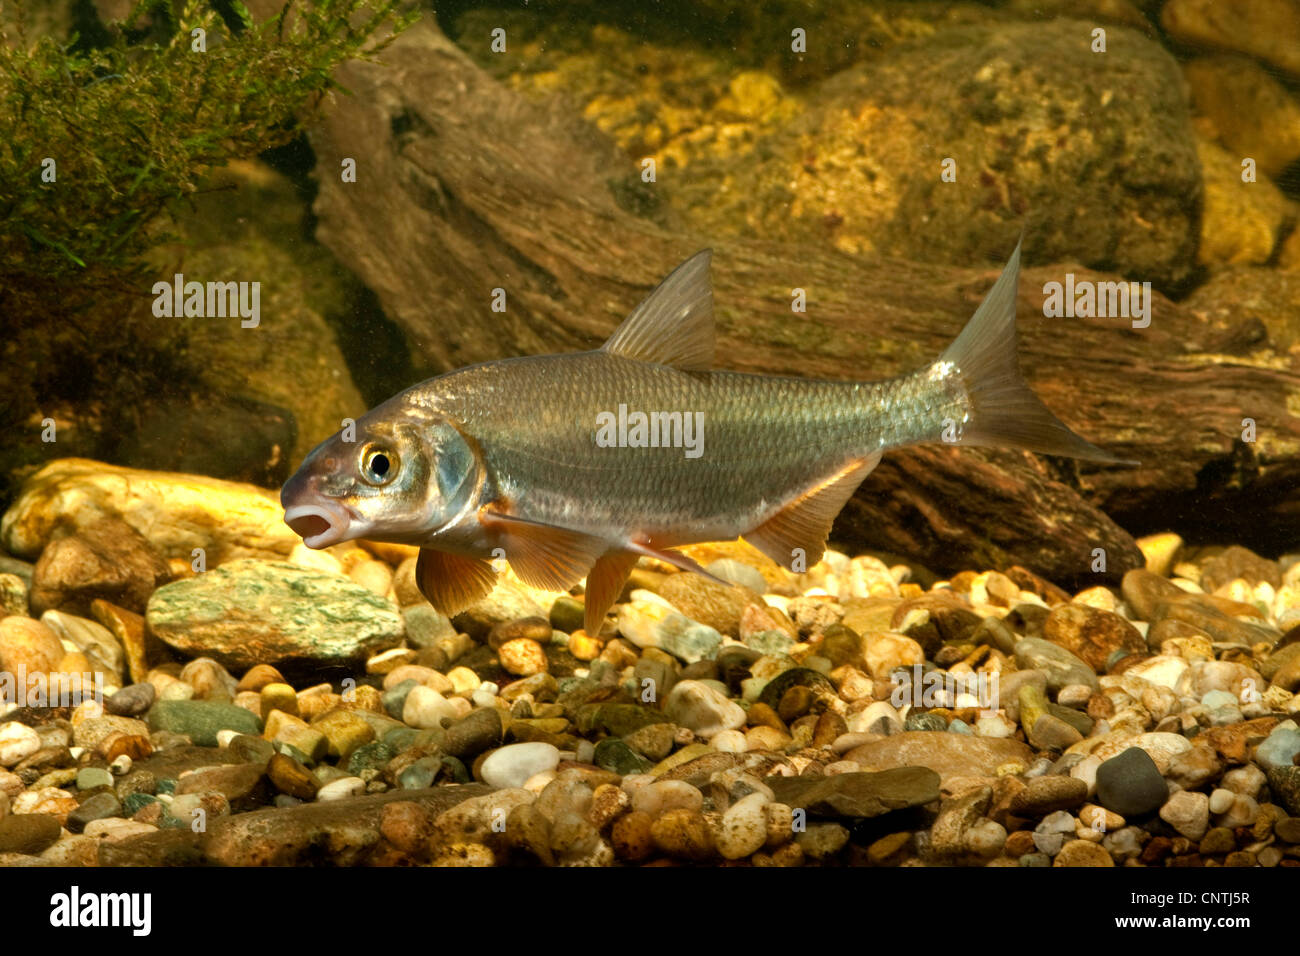 Vimba elongata (Vimba elongata, Abramis elongatus), swimming over gravel ground, Germany, Starnberger See Stock Photo